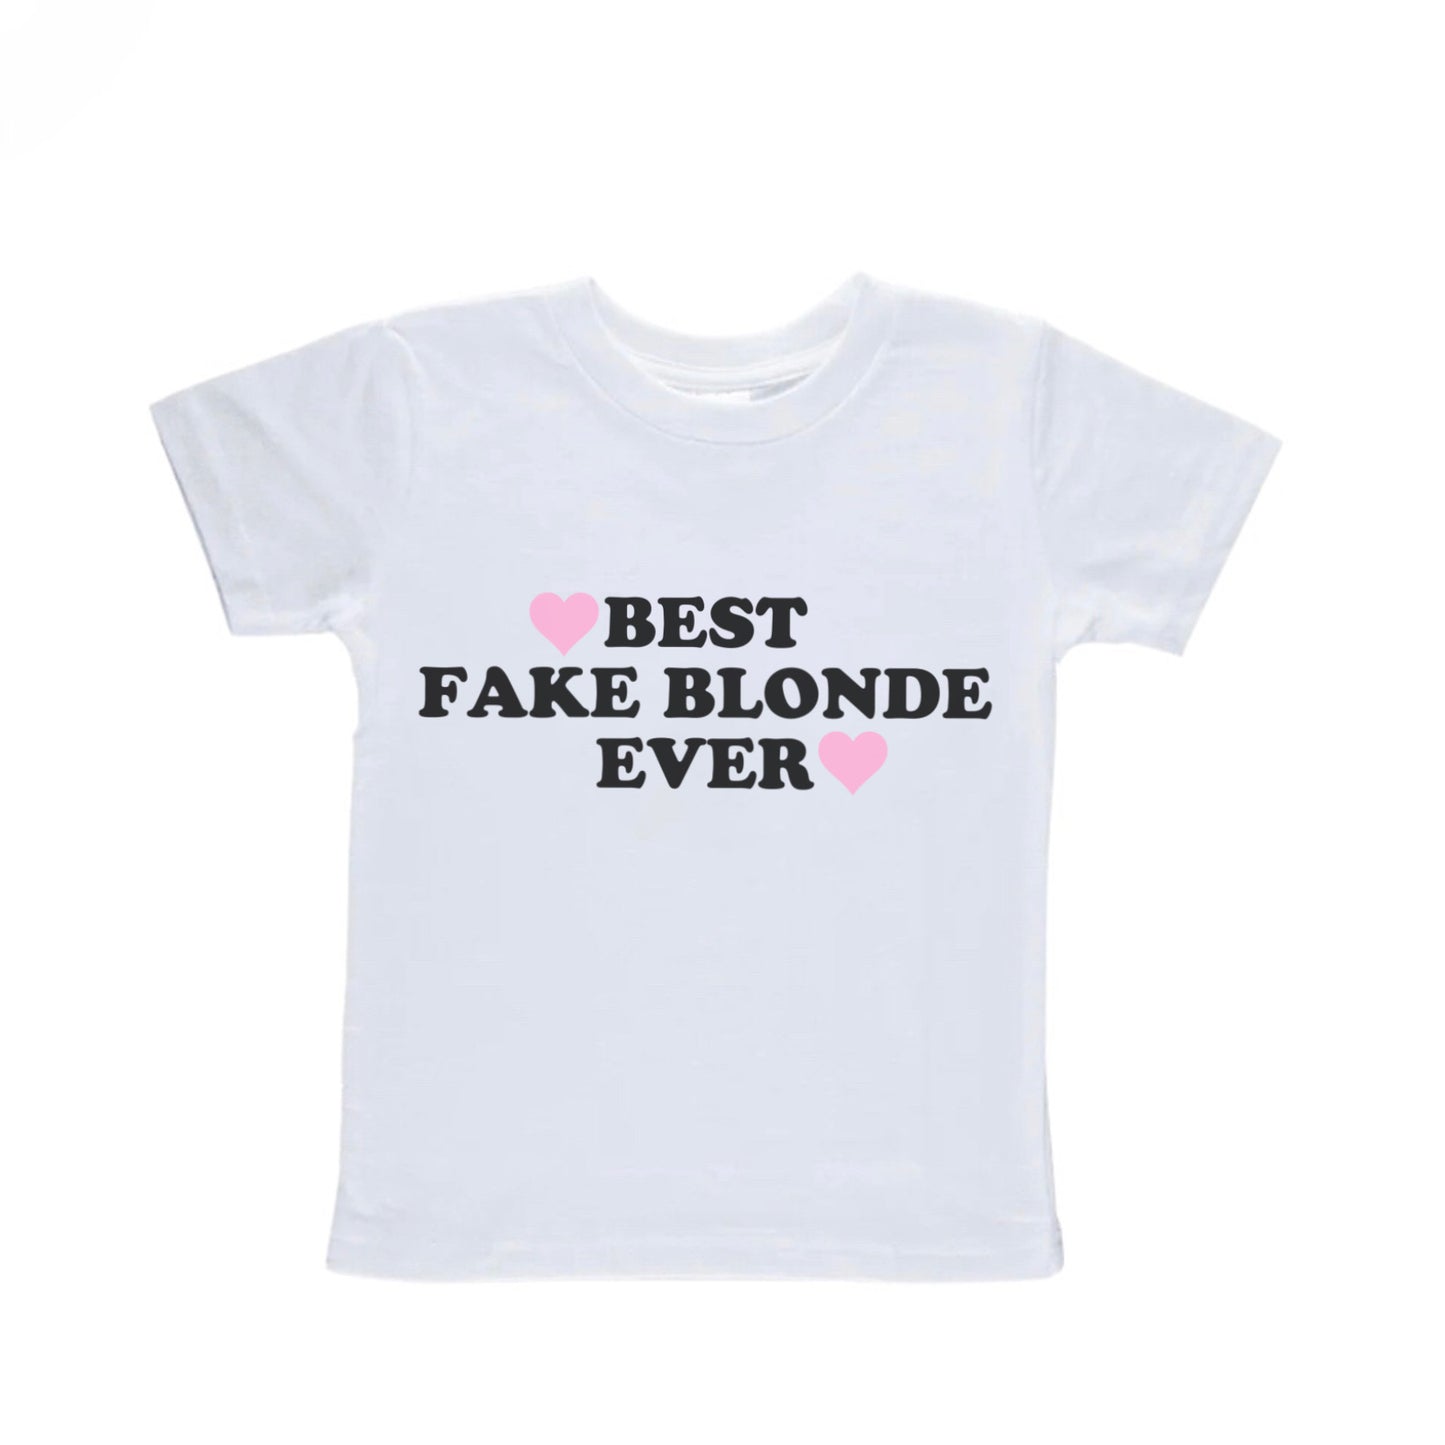 Best Fake Blonde Ever Baby Tee